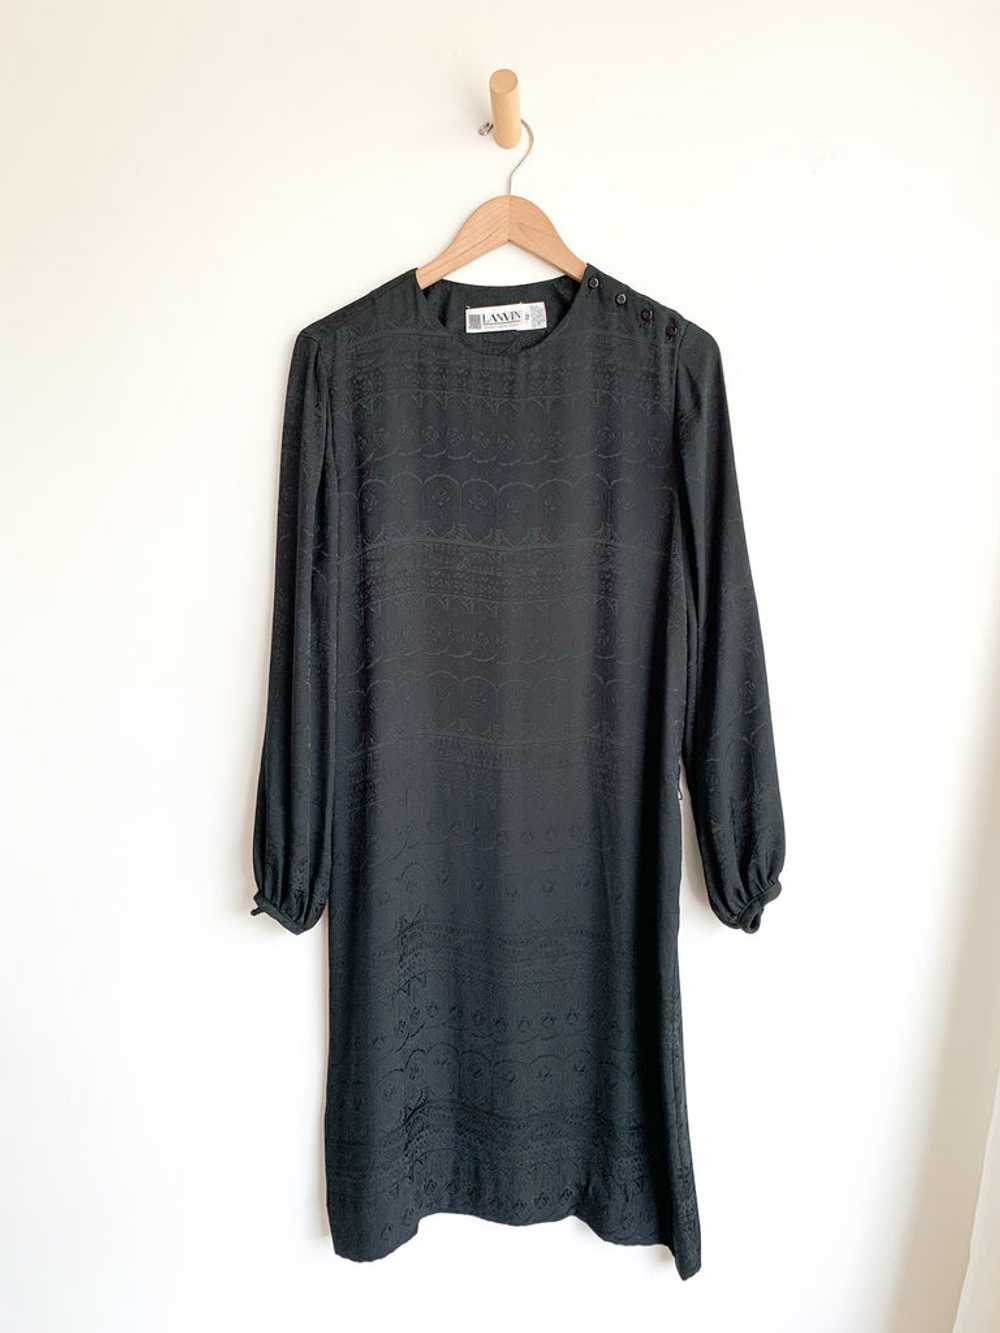 Lanvin Silk Jacquard Dress - image 2